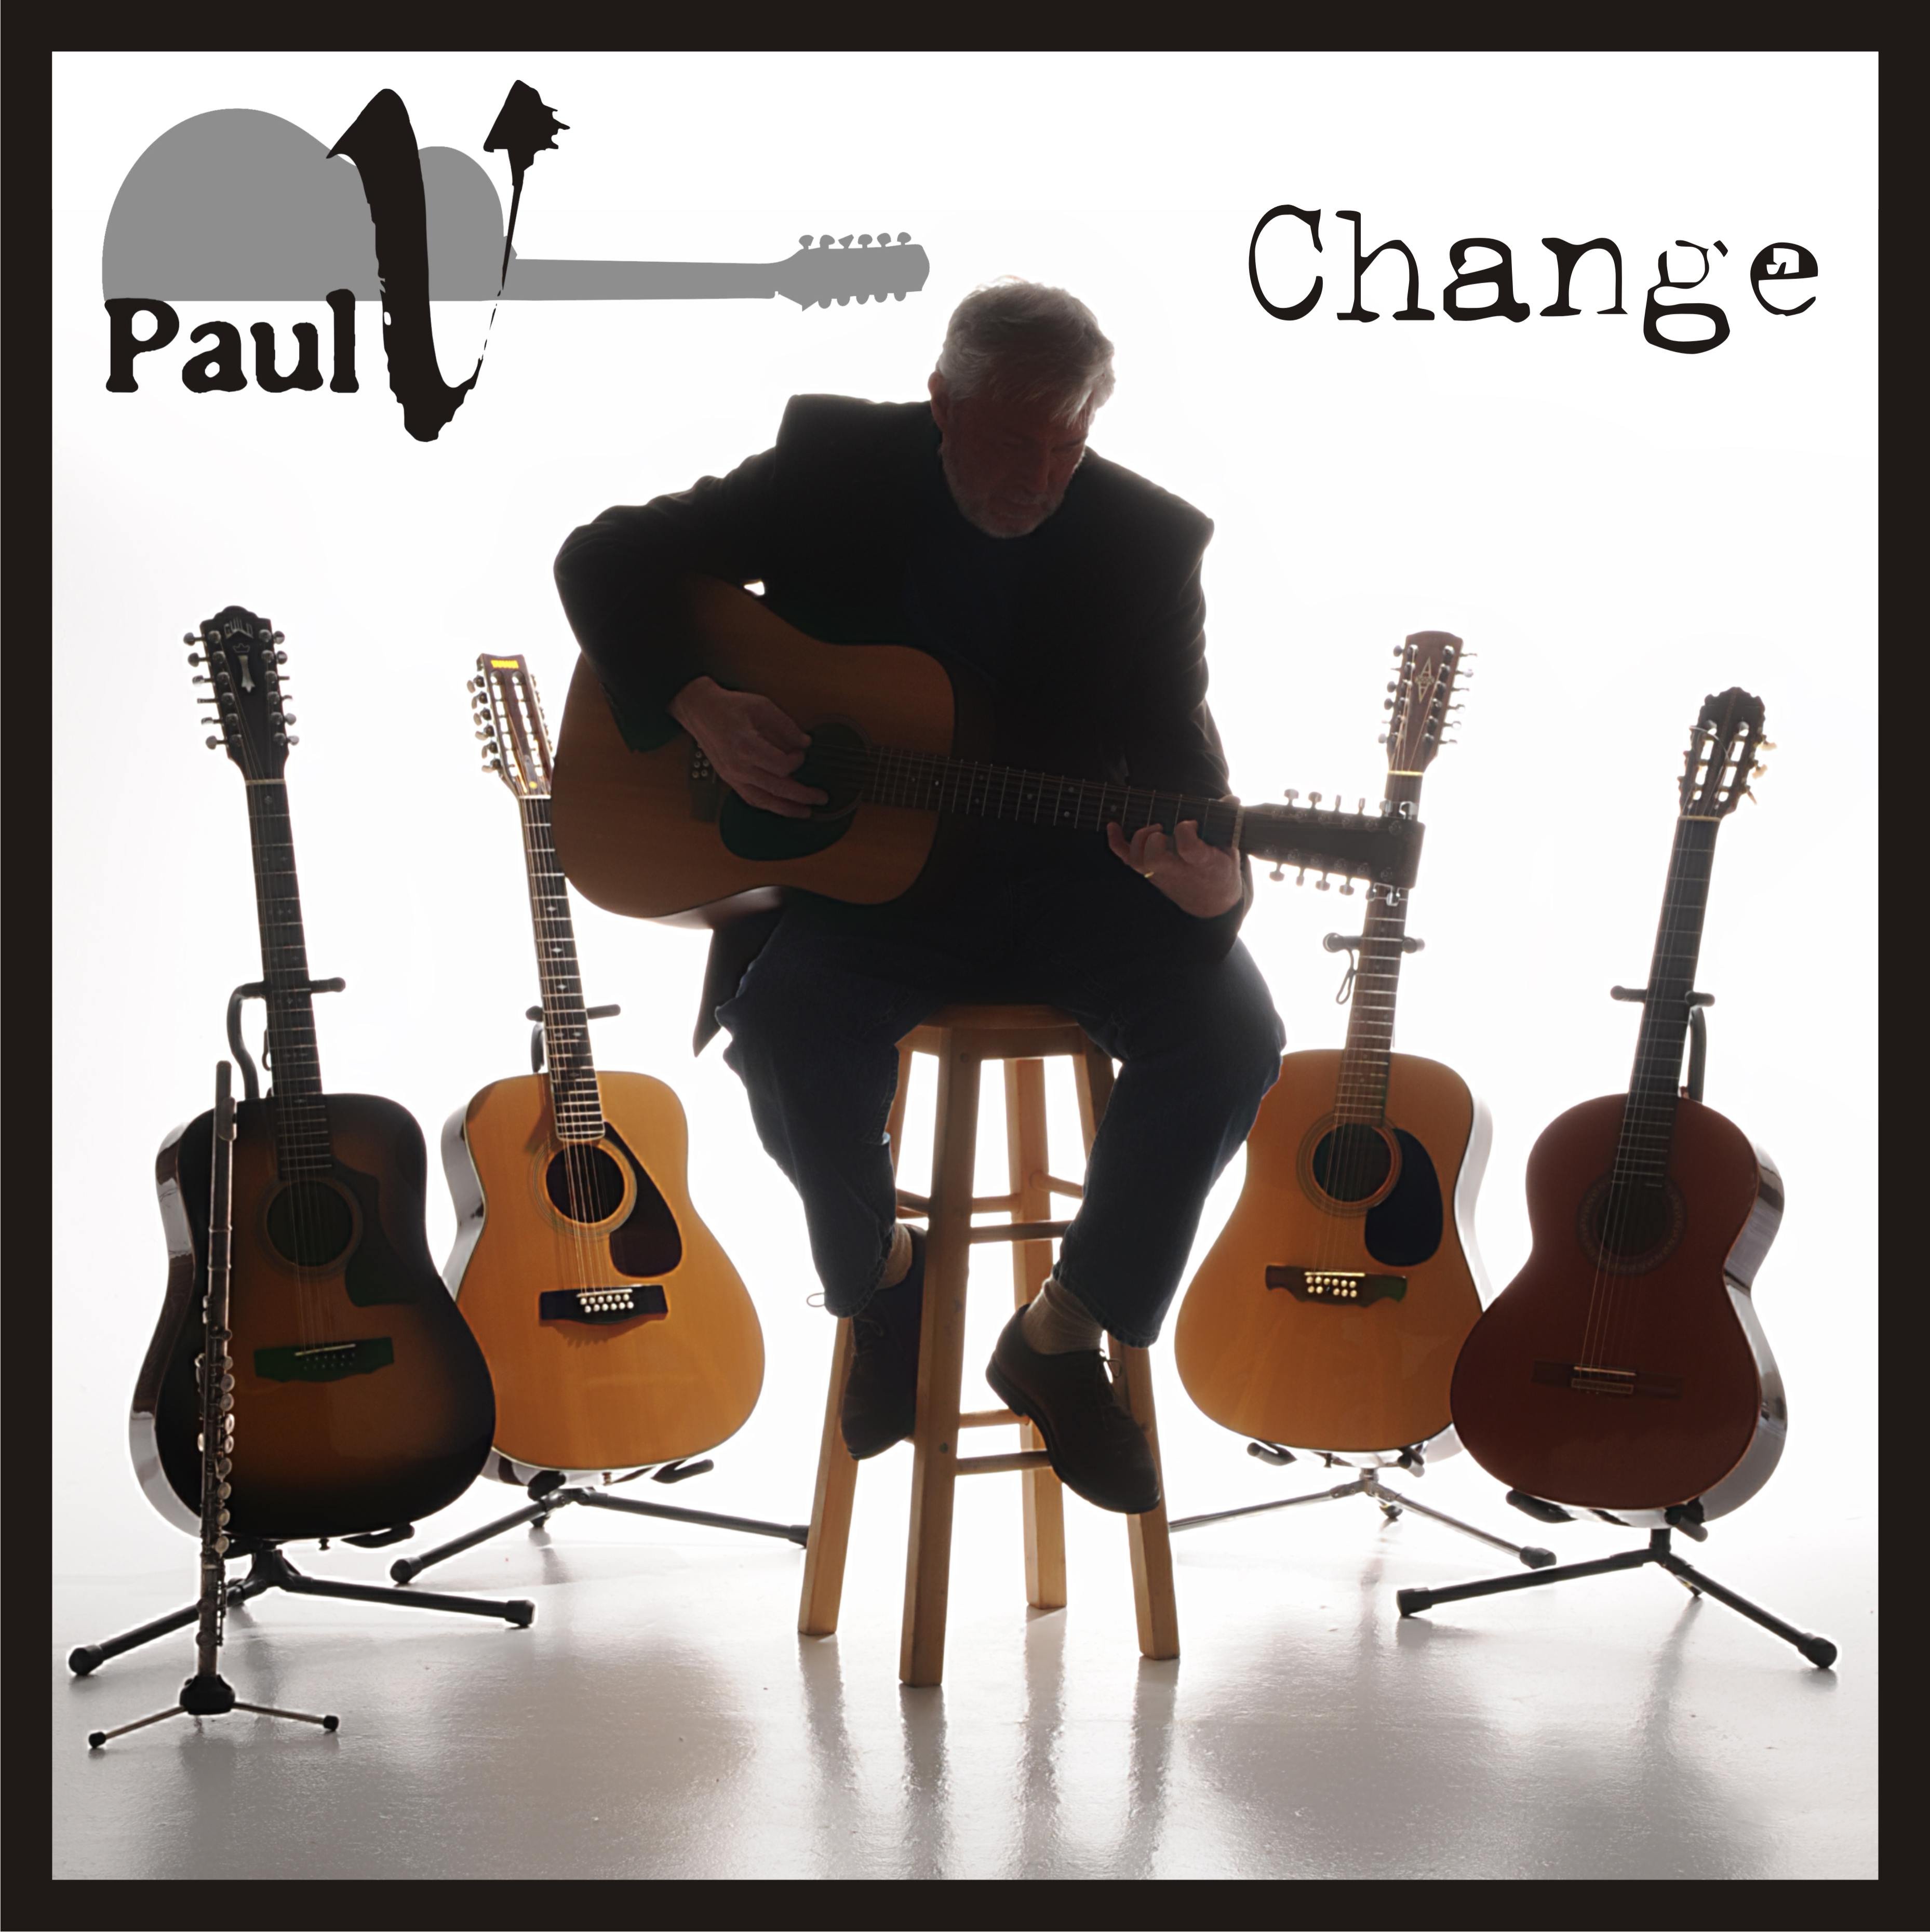 Paul changes. Hayd changes обложка.